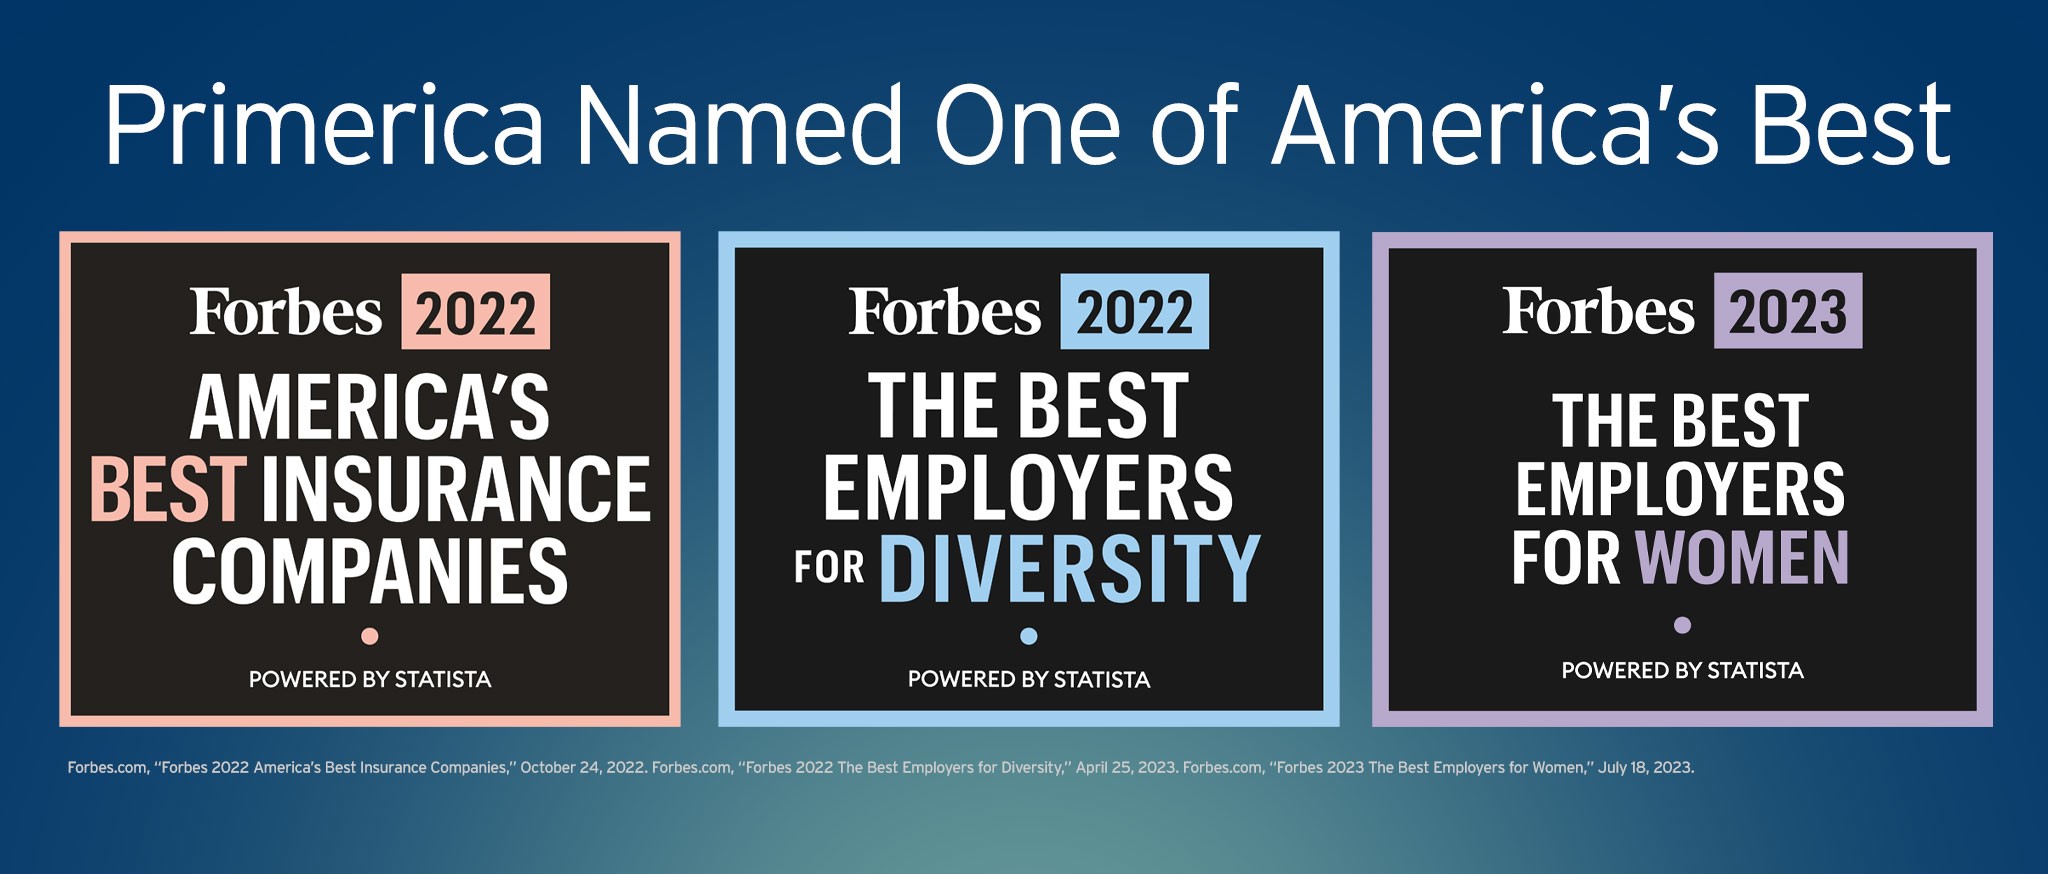 Primerica Named One of America's Best Insurance Companies by Forbes - Forbes 2022 America's Best Insurance Companies